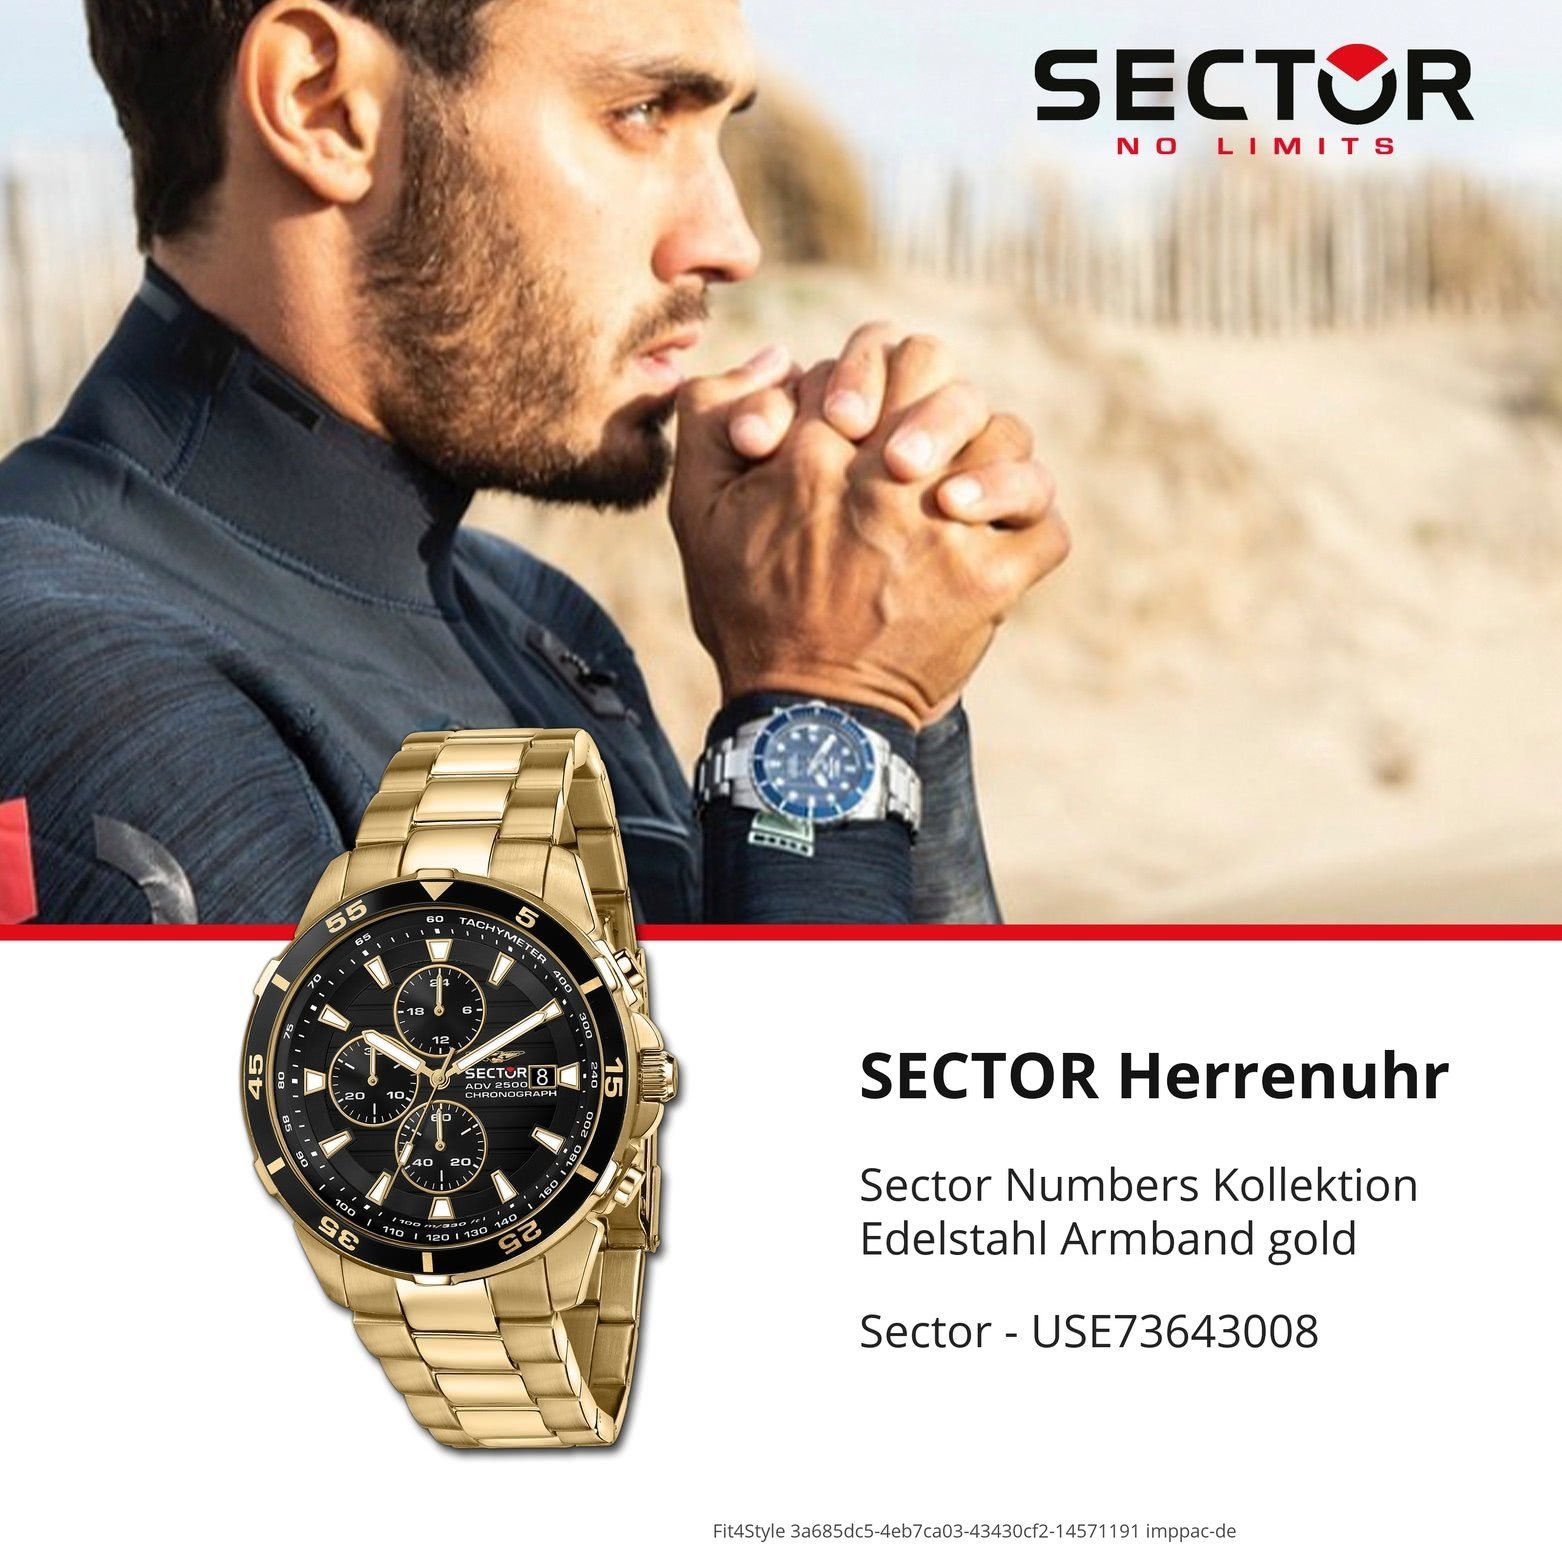 Sector Herren rund, Armbanduhr Fashion Chrono, Edelstahlarmband Herren Armbanduhr (45mm), Sector groß Chronograph gold,